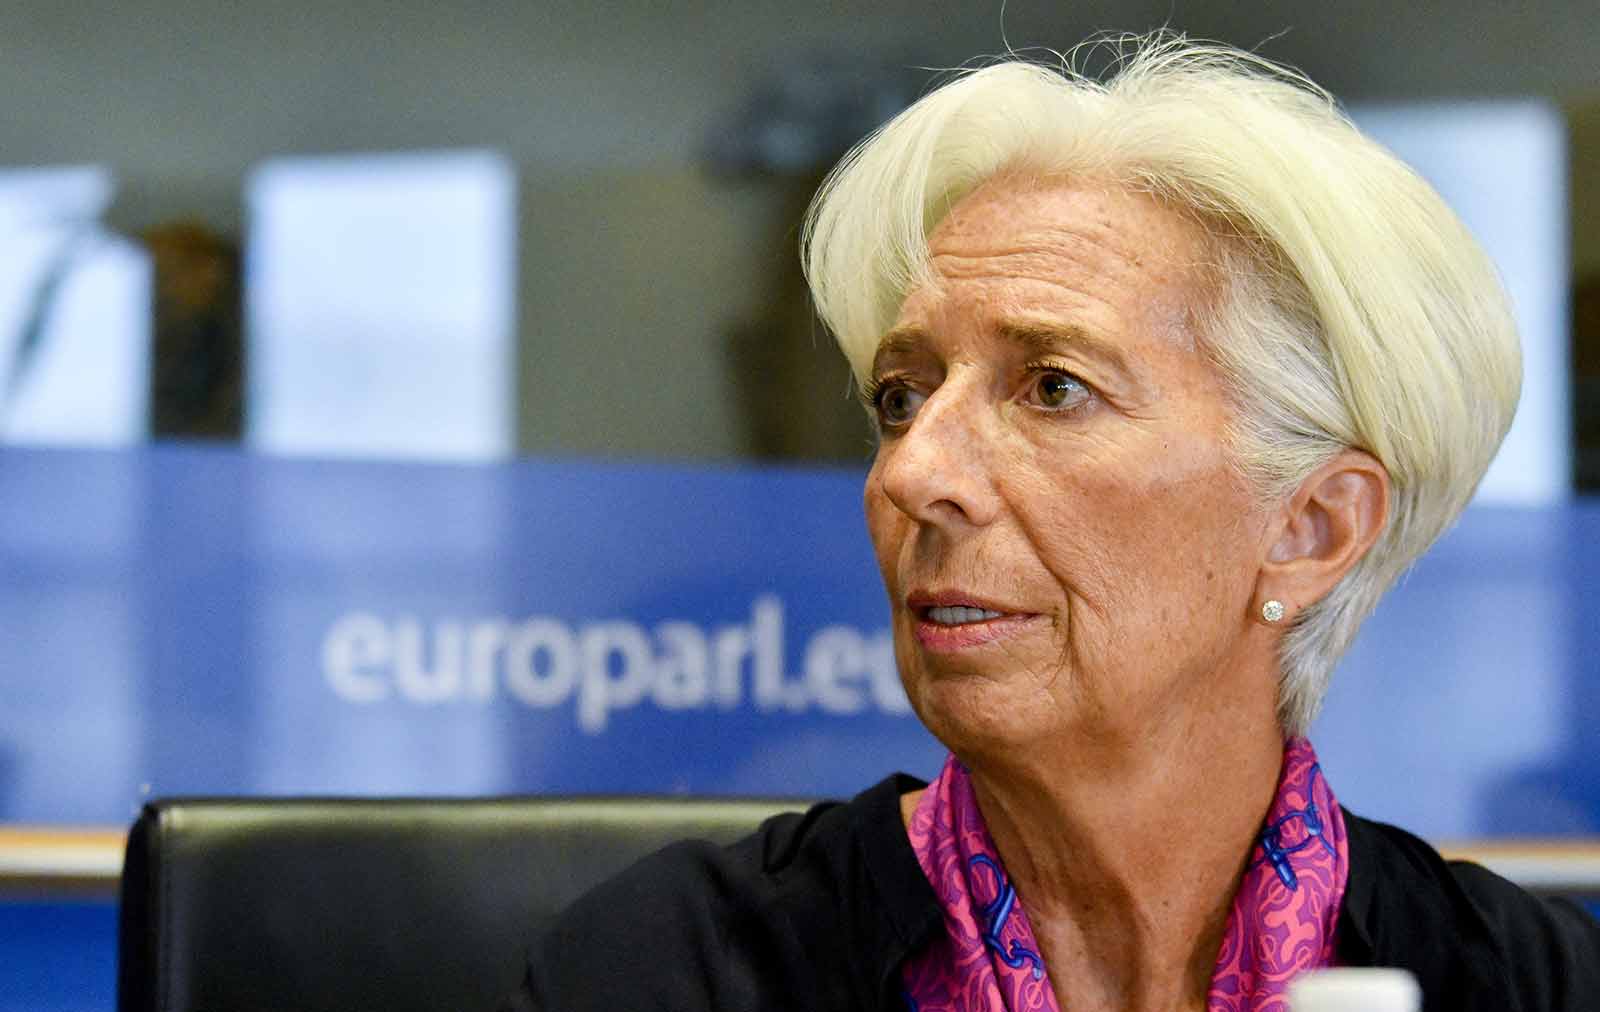 Christine Lagarde ECB